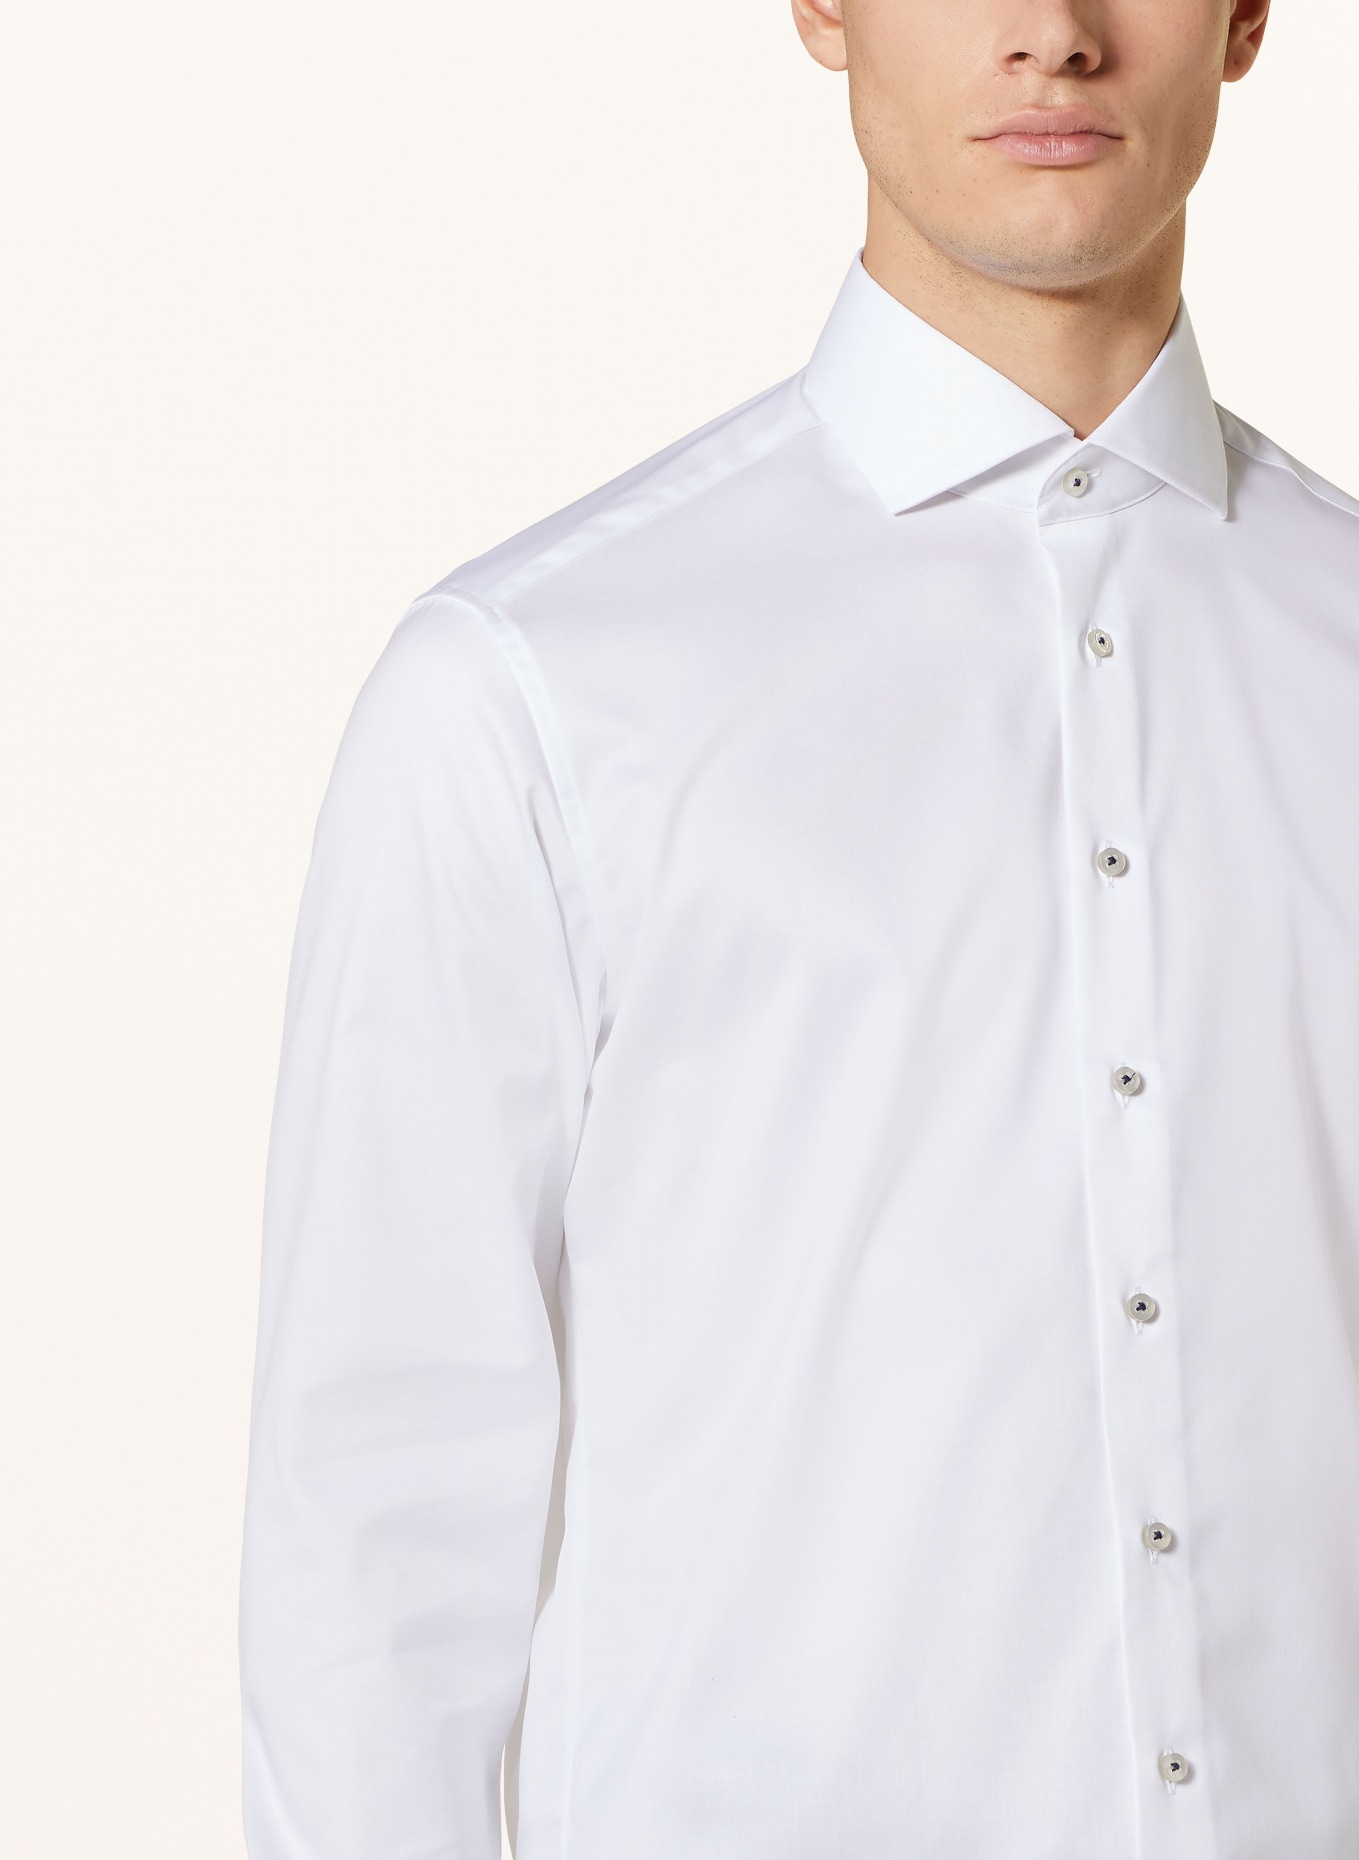 ETERNA 1863 in white modern Shirt fit